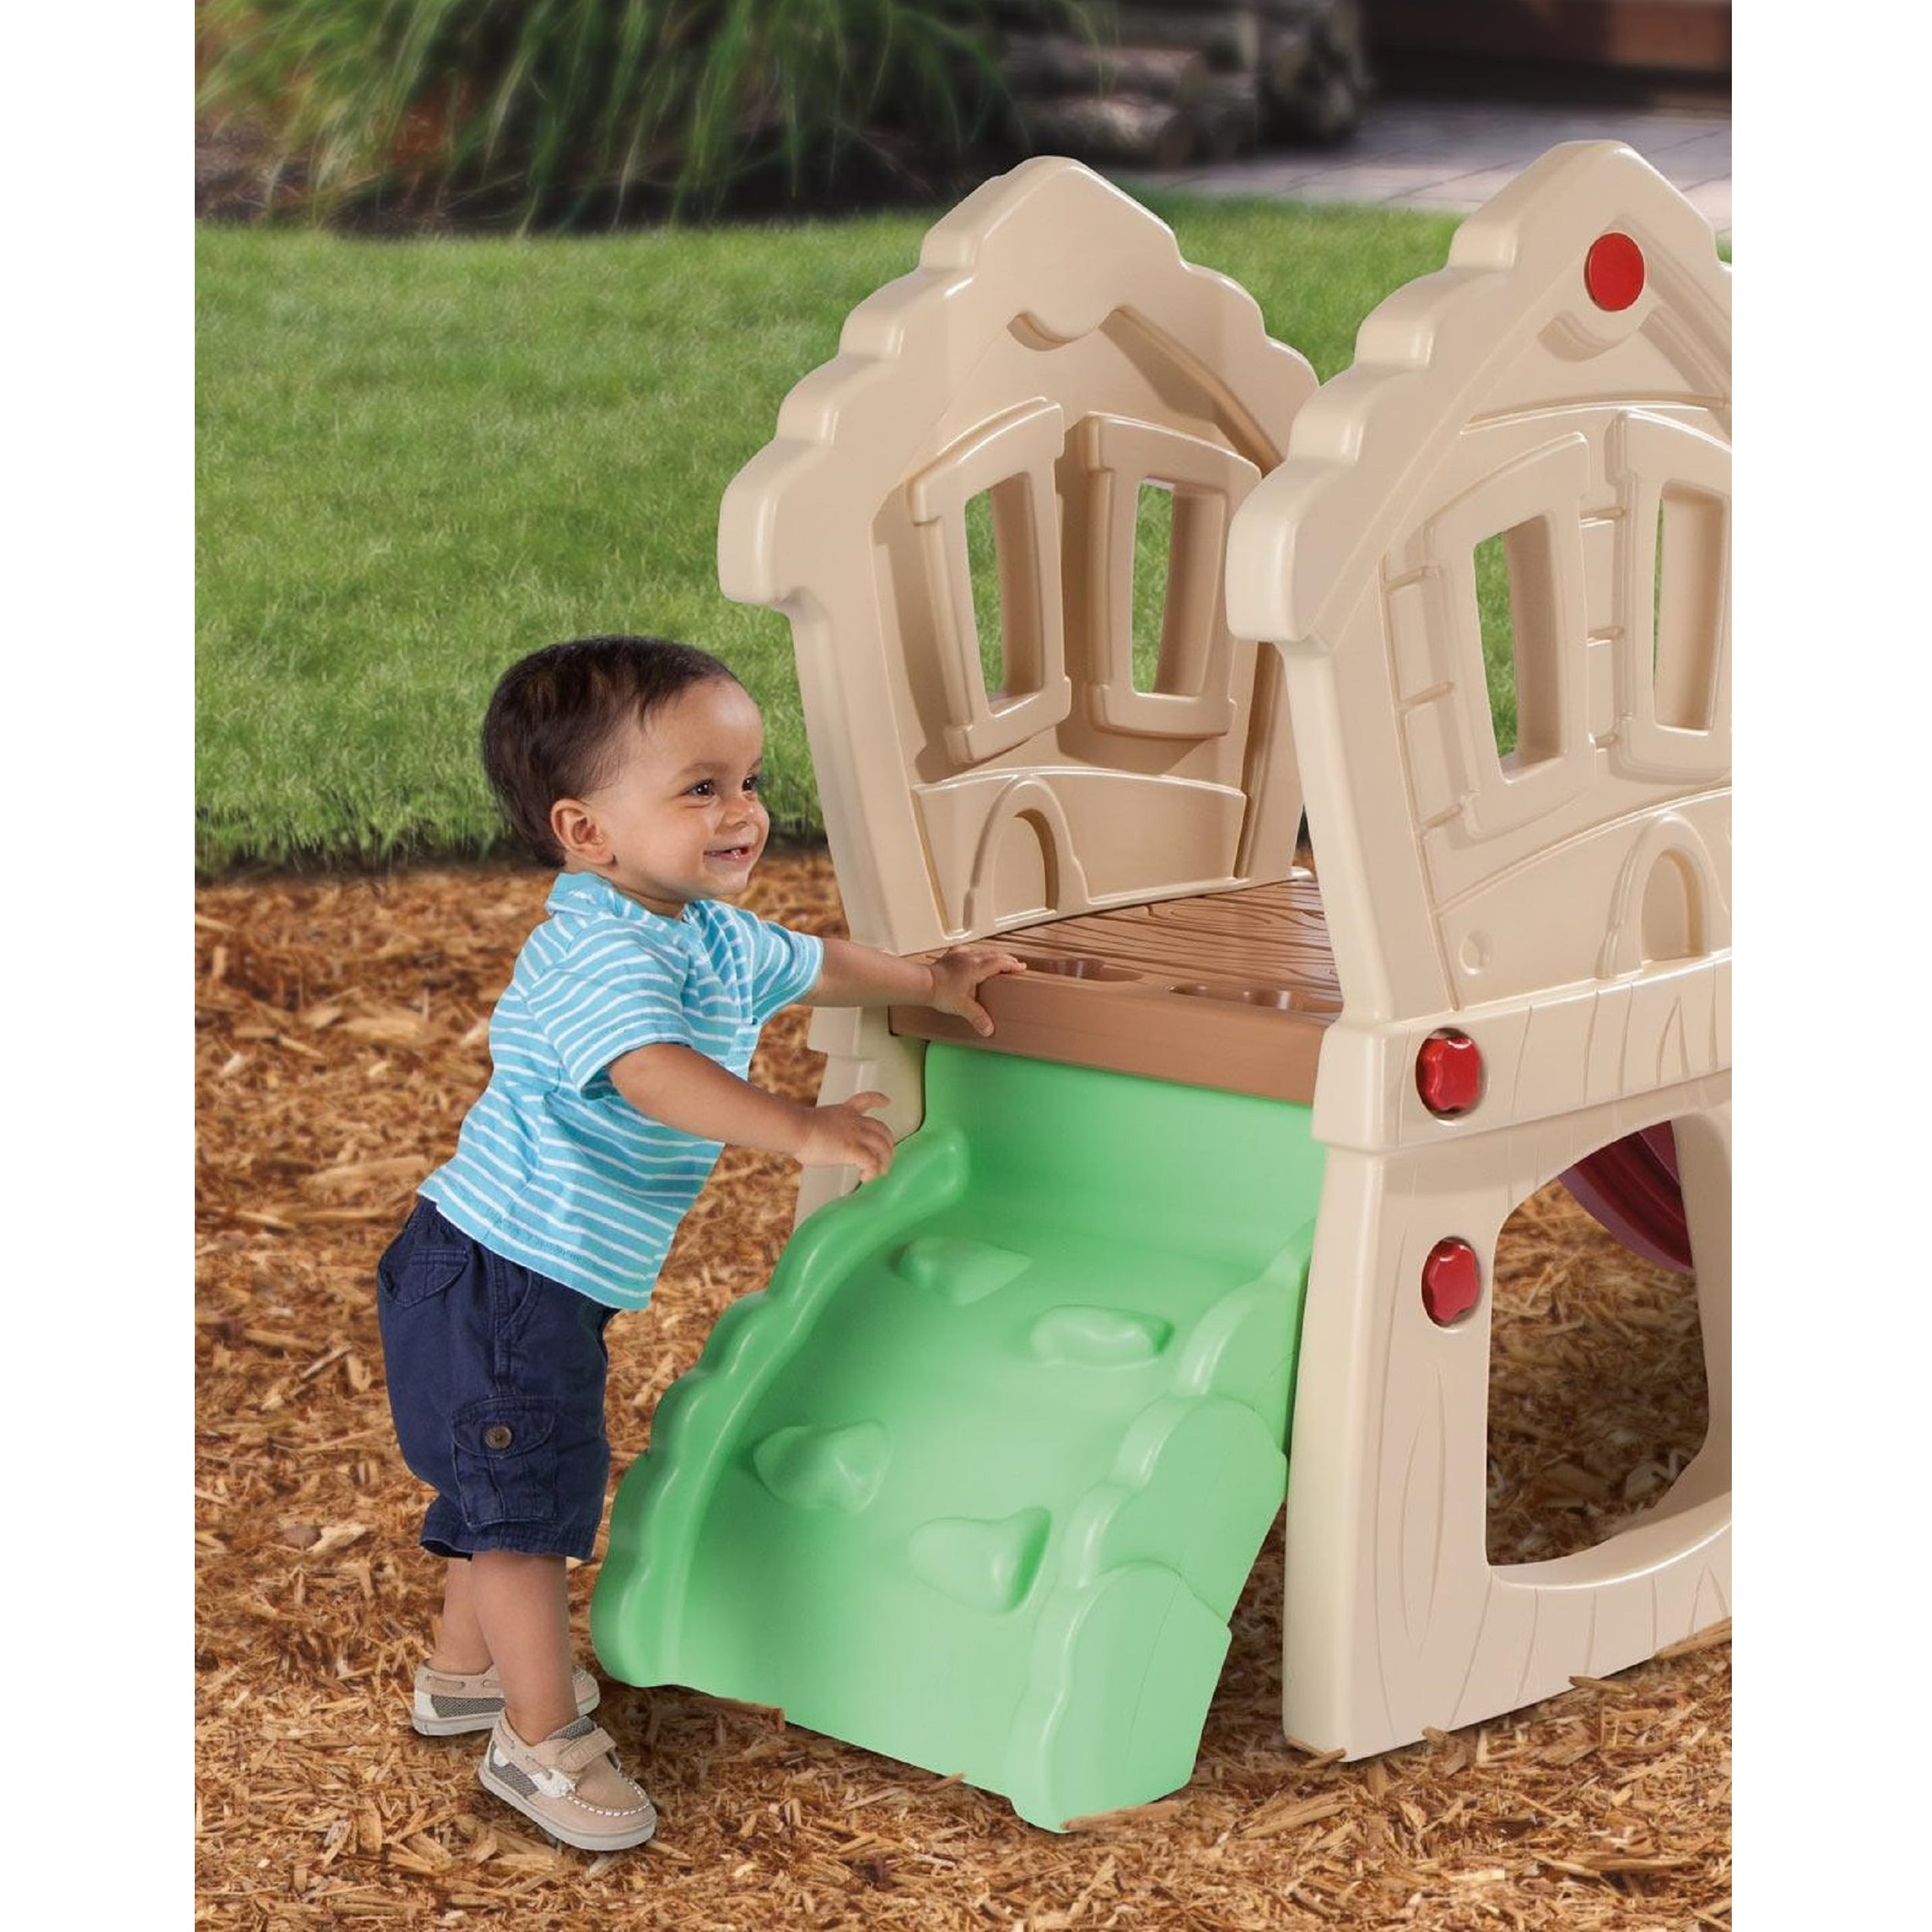 Little Tikes Hide And Seek Climber and Swing - Kids Slide Backyard Play Set - 2